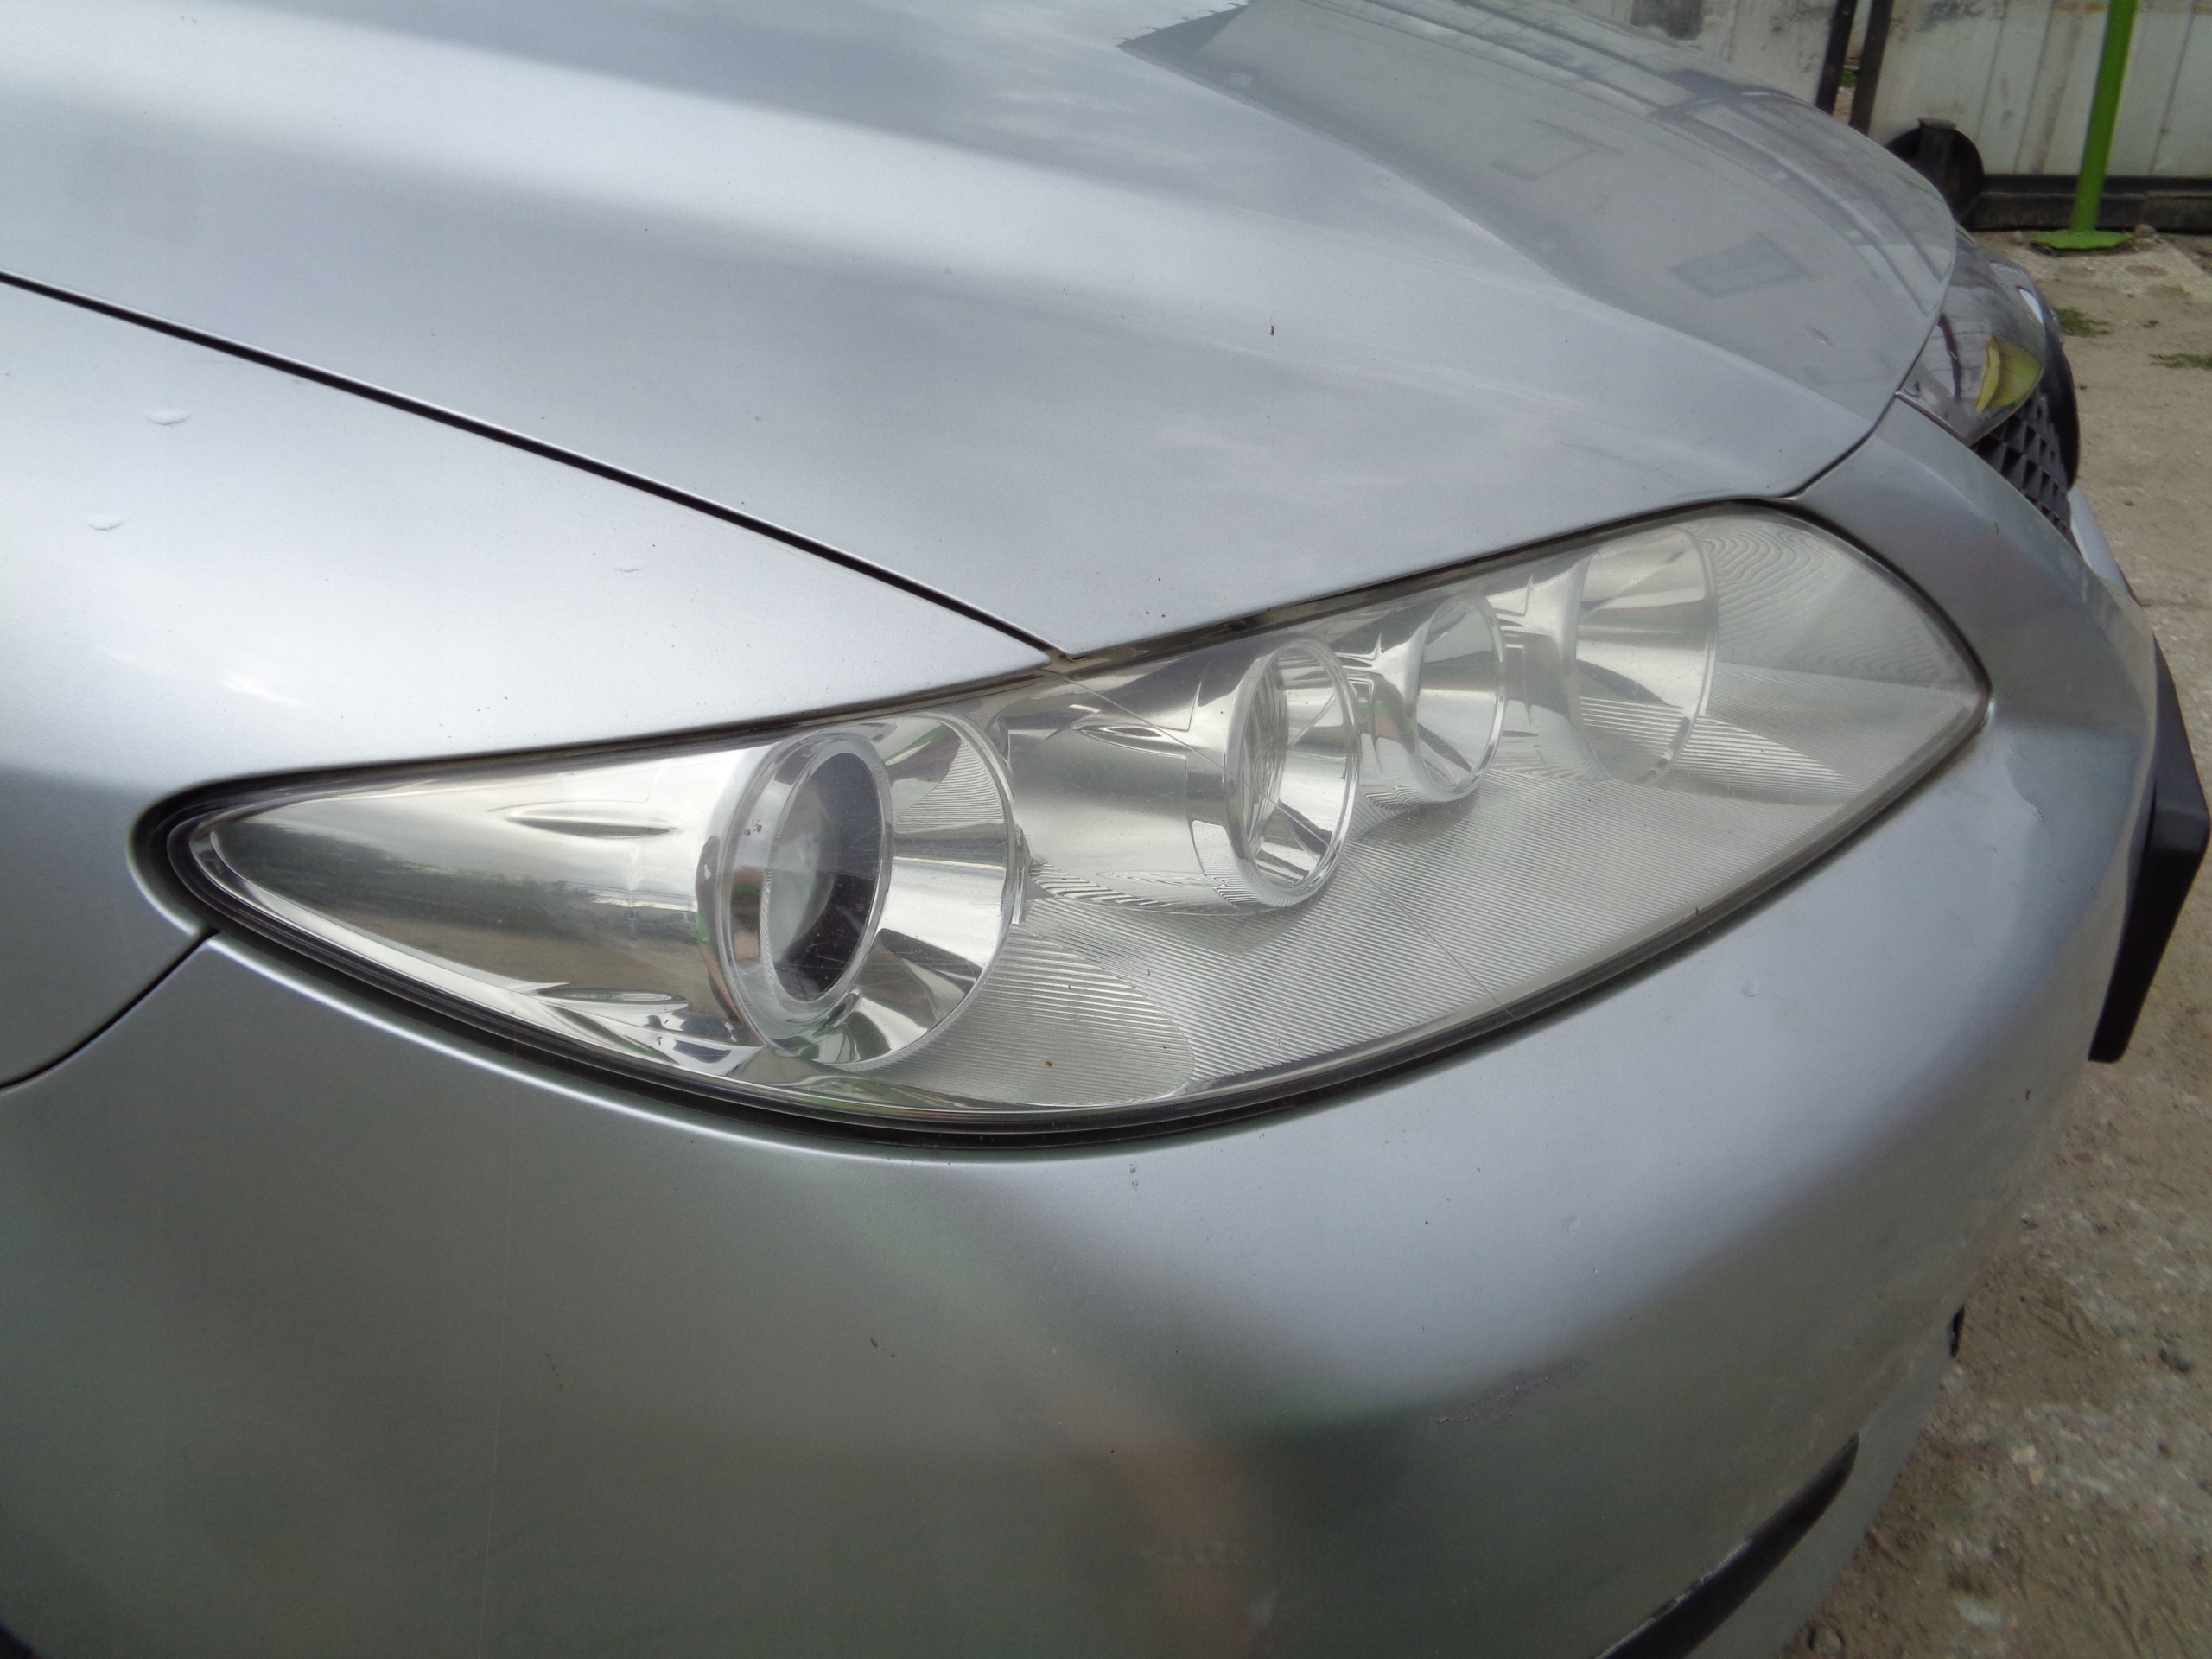 Reflektor Lampa Prawa Przód Mazda 6 I Gg Al 02-05 Za 218,49 Zł Z Brodnica - Allegro.pl - (7509767293)